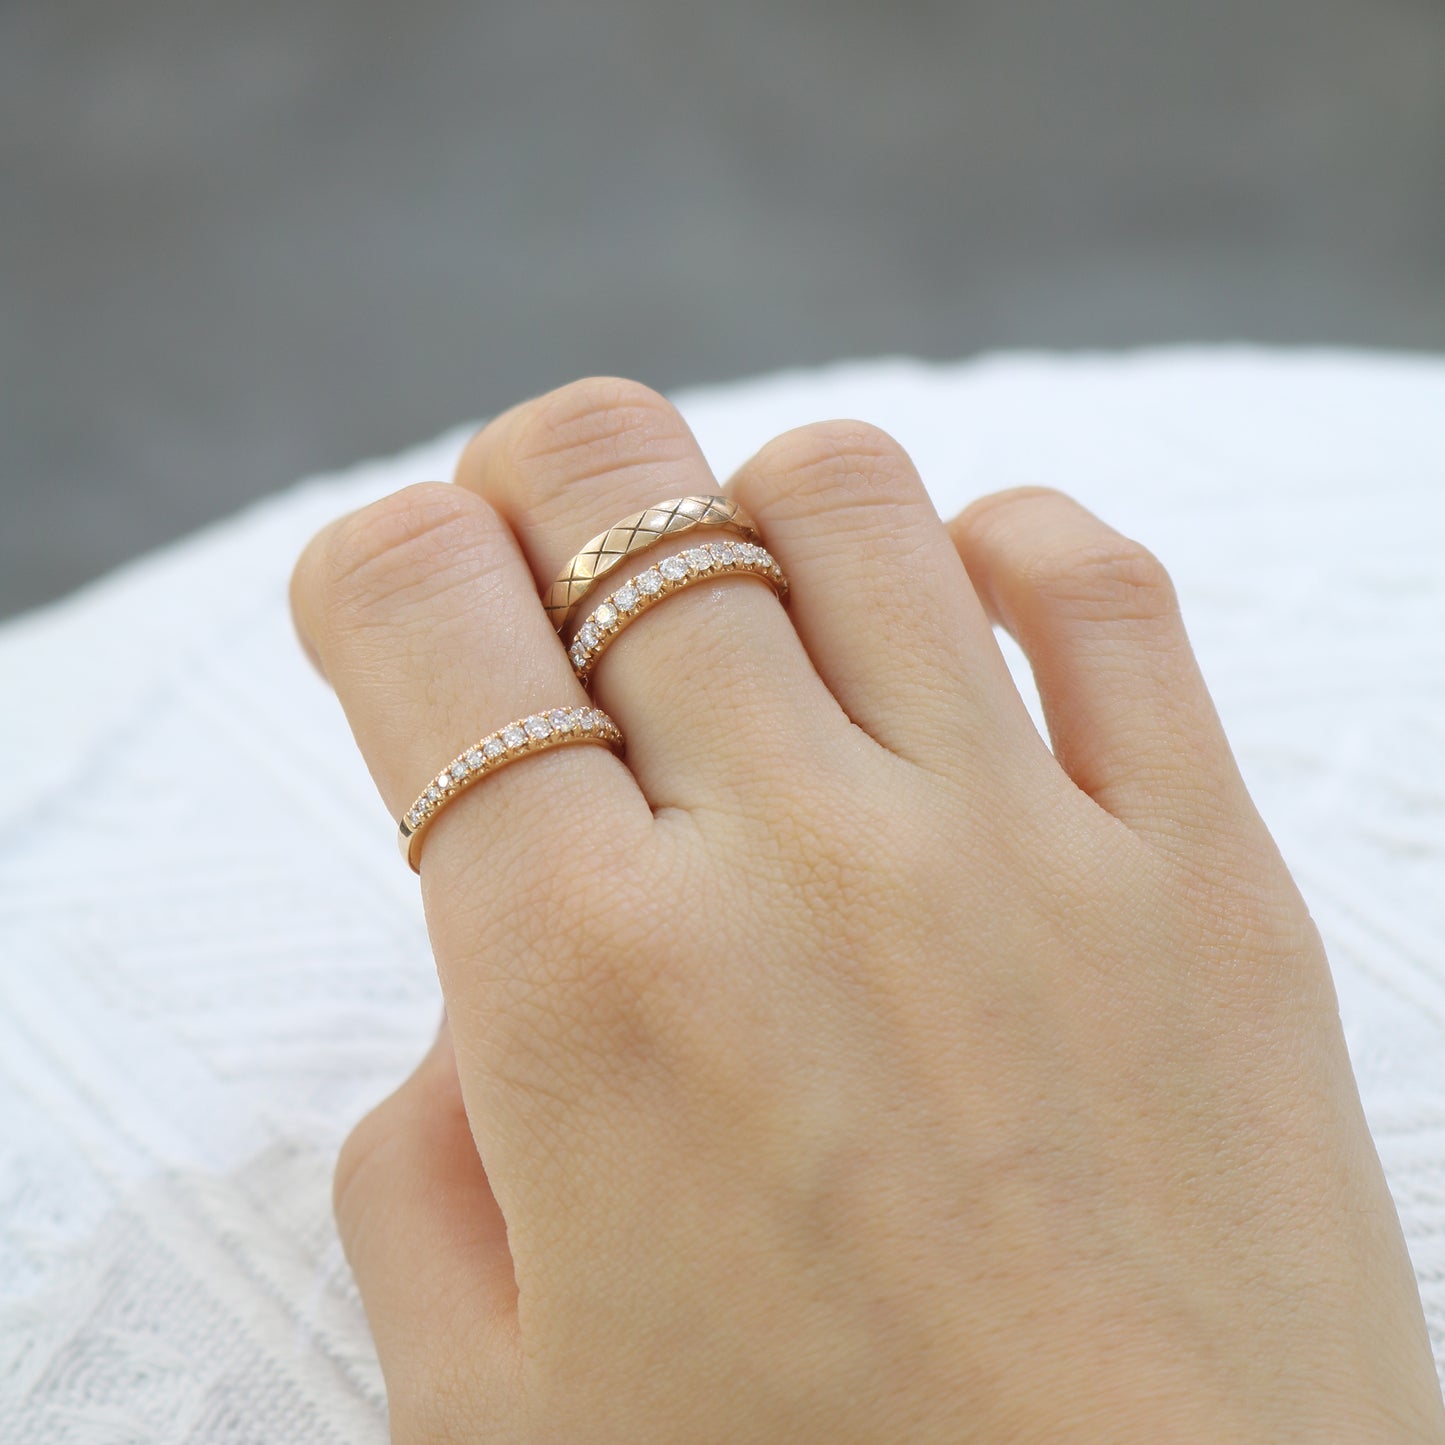 三隻18k玫瑰金漸層鑽石條戒 Three 18k Rose Gold Graduated French Pavé Diamond Ring on hand